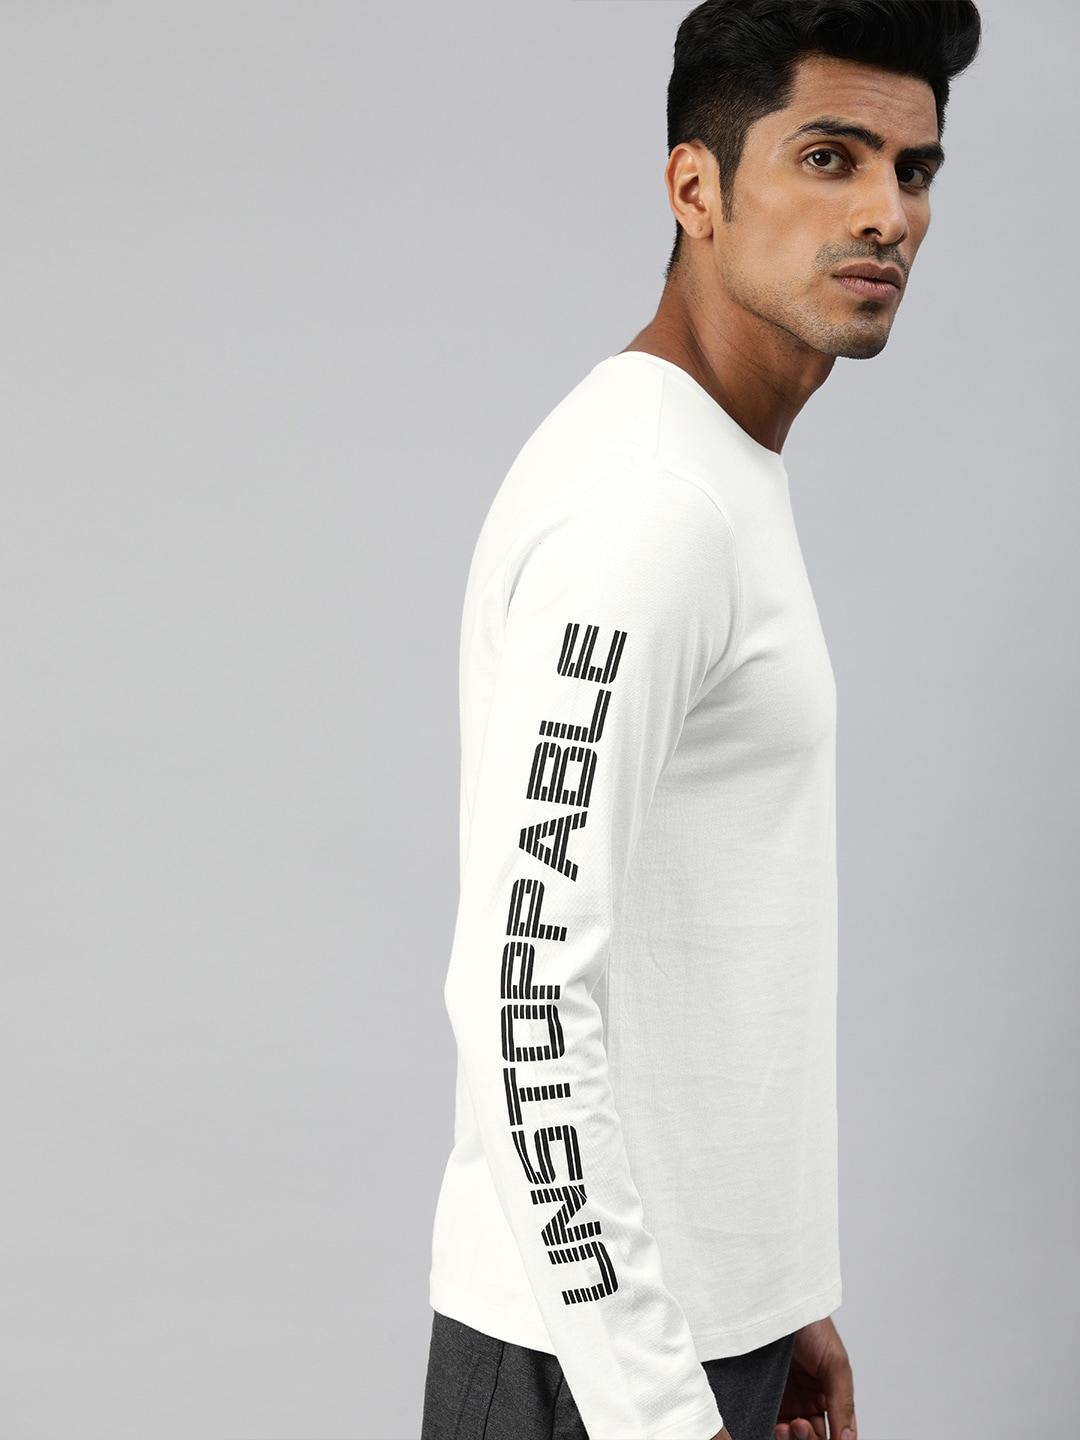 hrx-by-hrithik-roshan-men-white-printed-bio-wash-lifestyle-tshirts